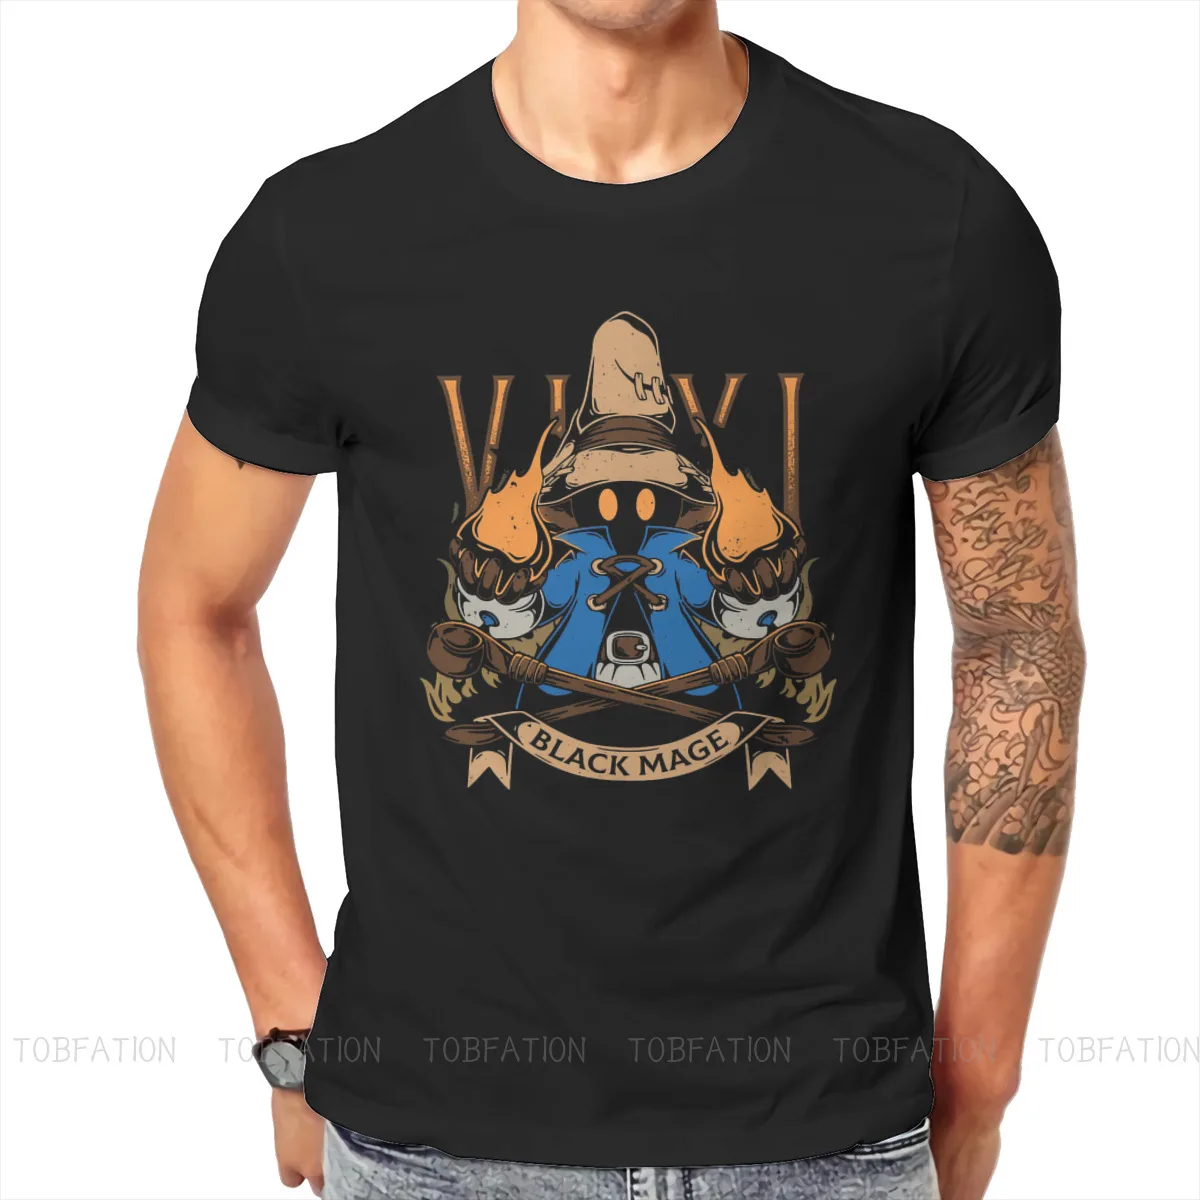 

Final Fantasy Cid Game Newest TShirt for Men Vivi Black Mage Round Neck Basic T Shirt Gift Clothes Streetwear Big Size